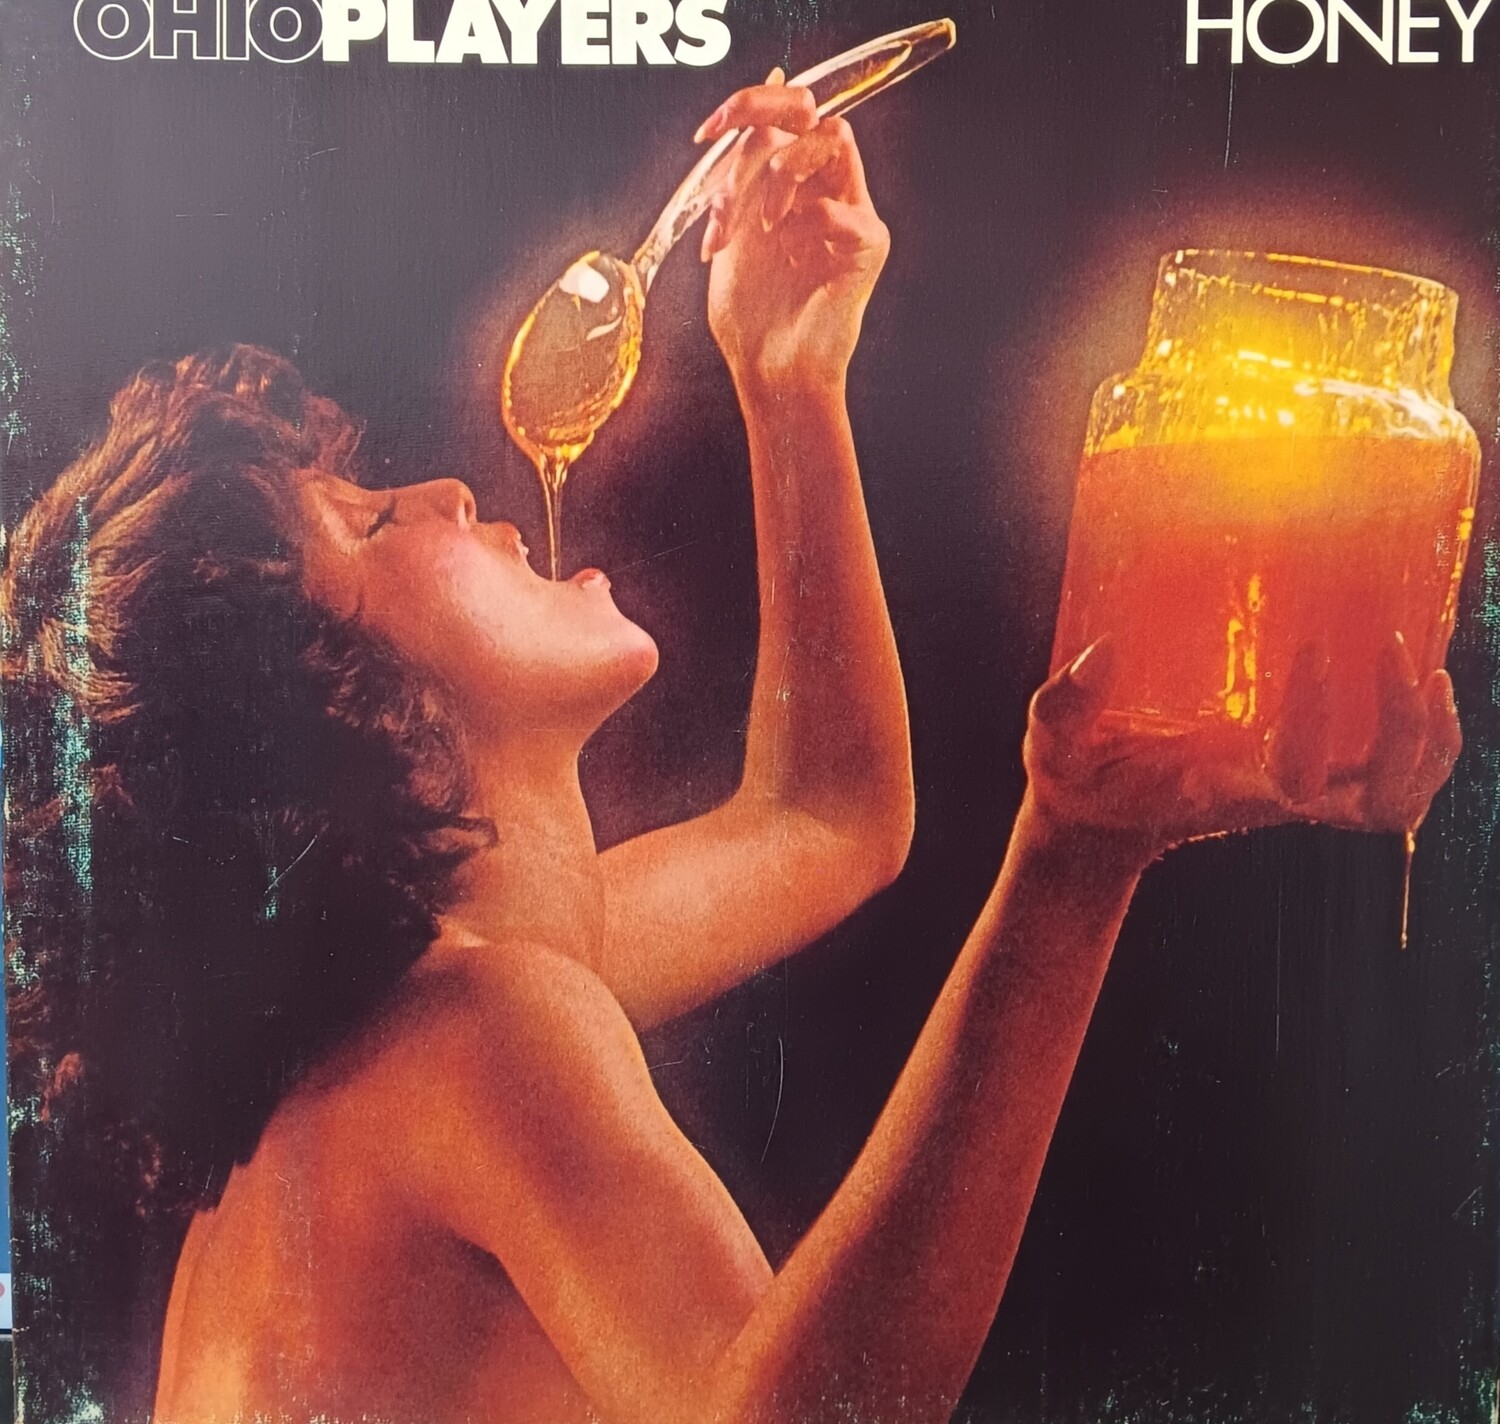 OHIO PLAYERS - Honey